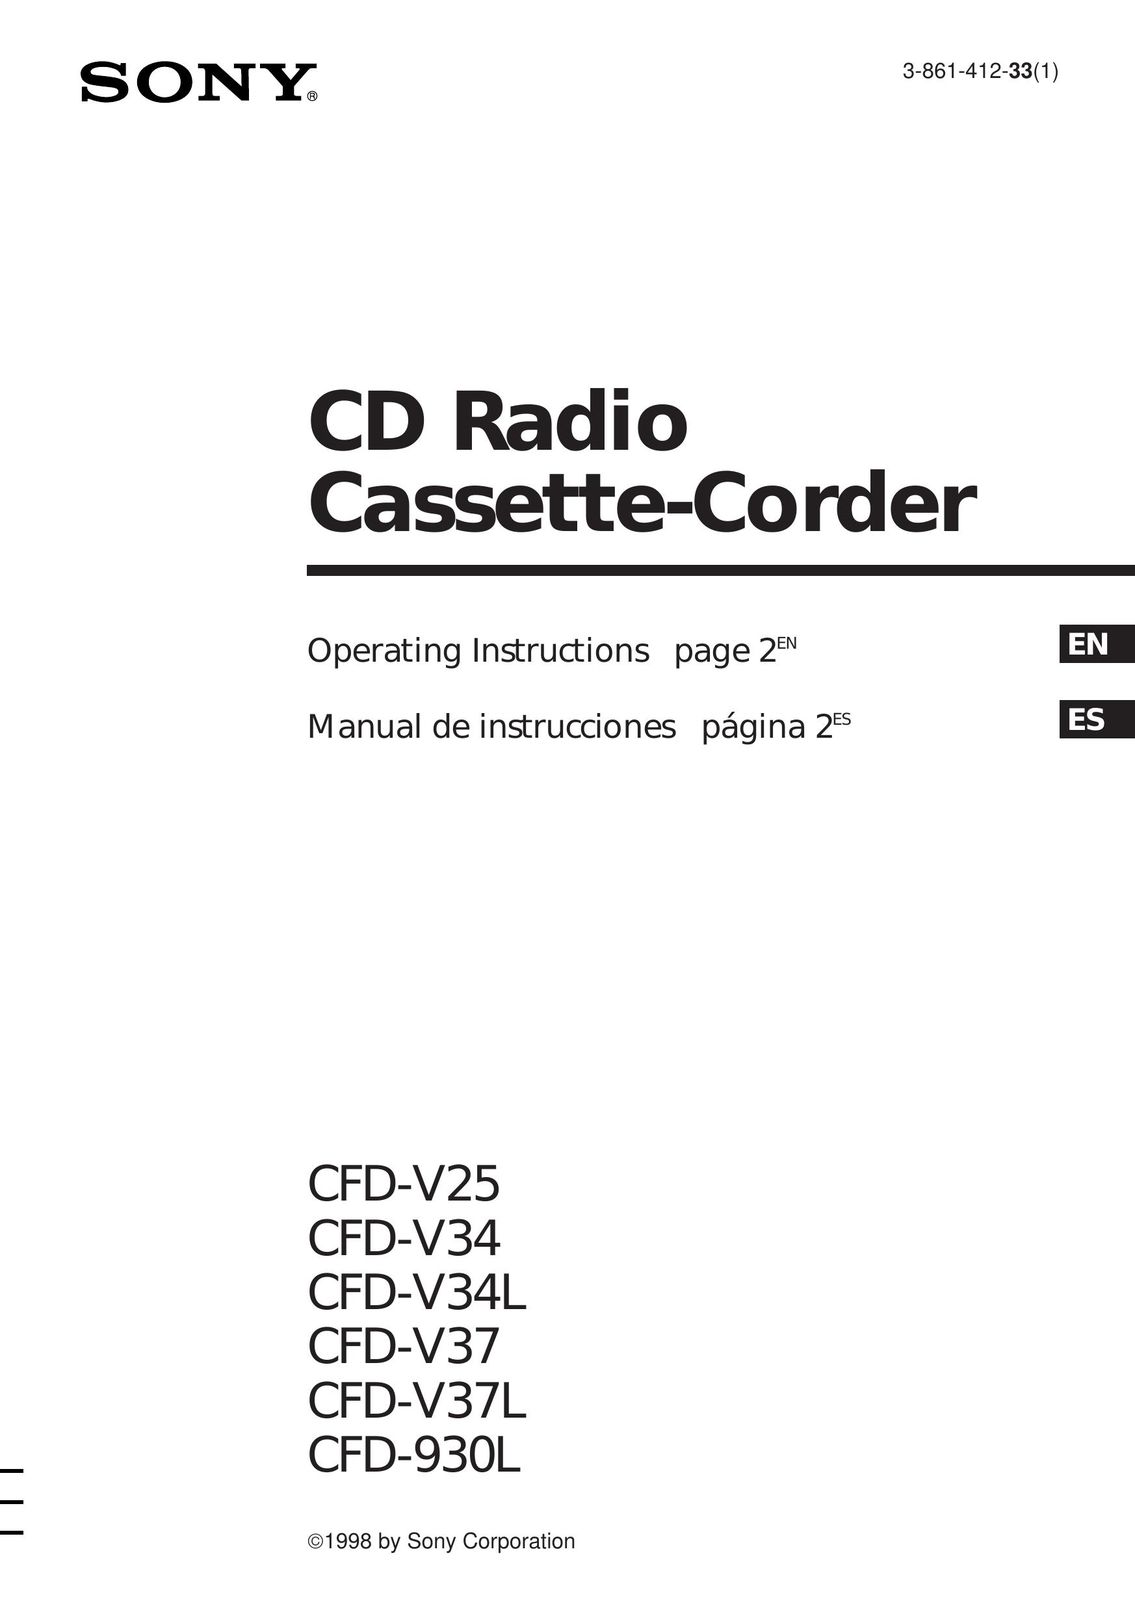 Sony CFD-V37 Cassette Player User Manual